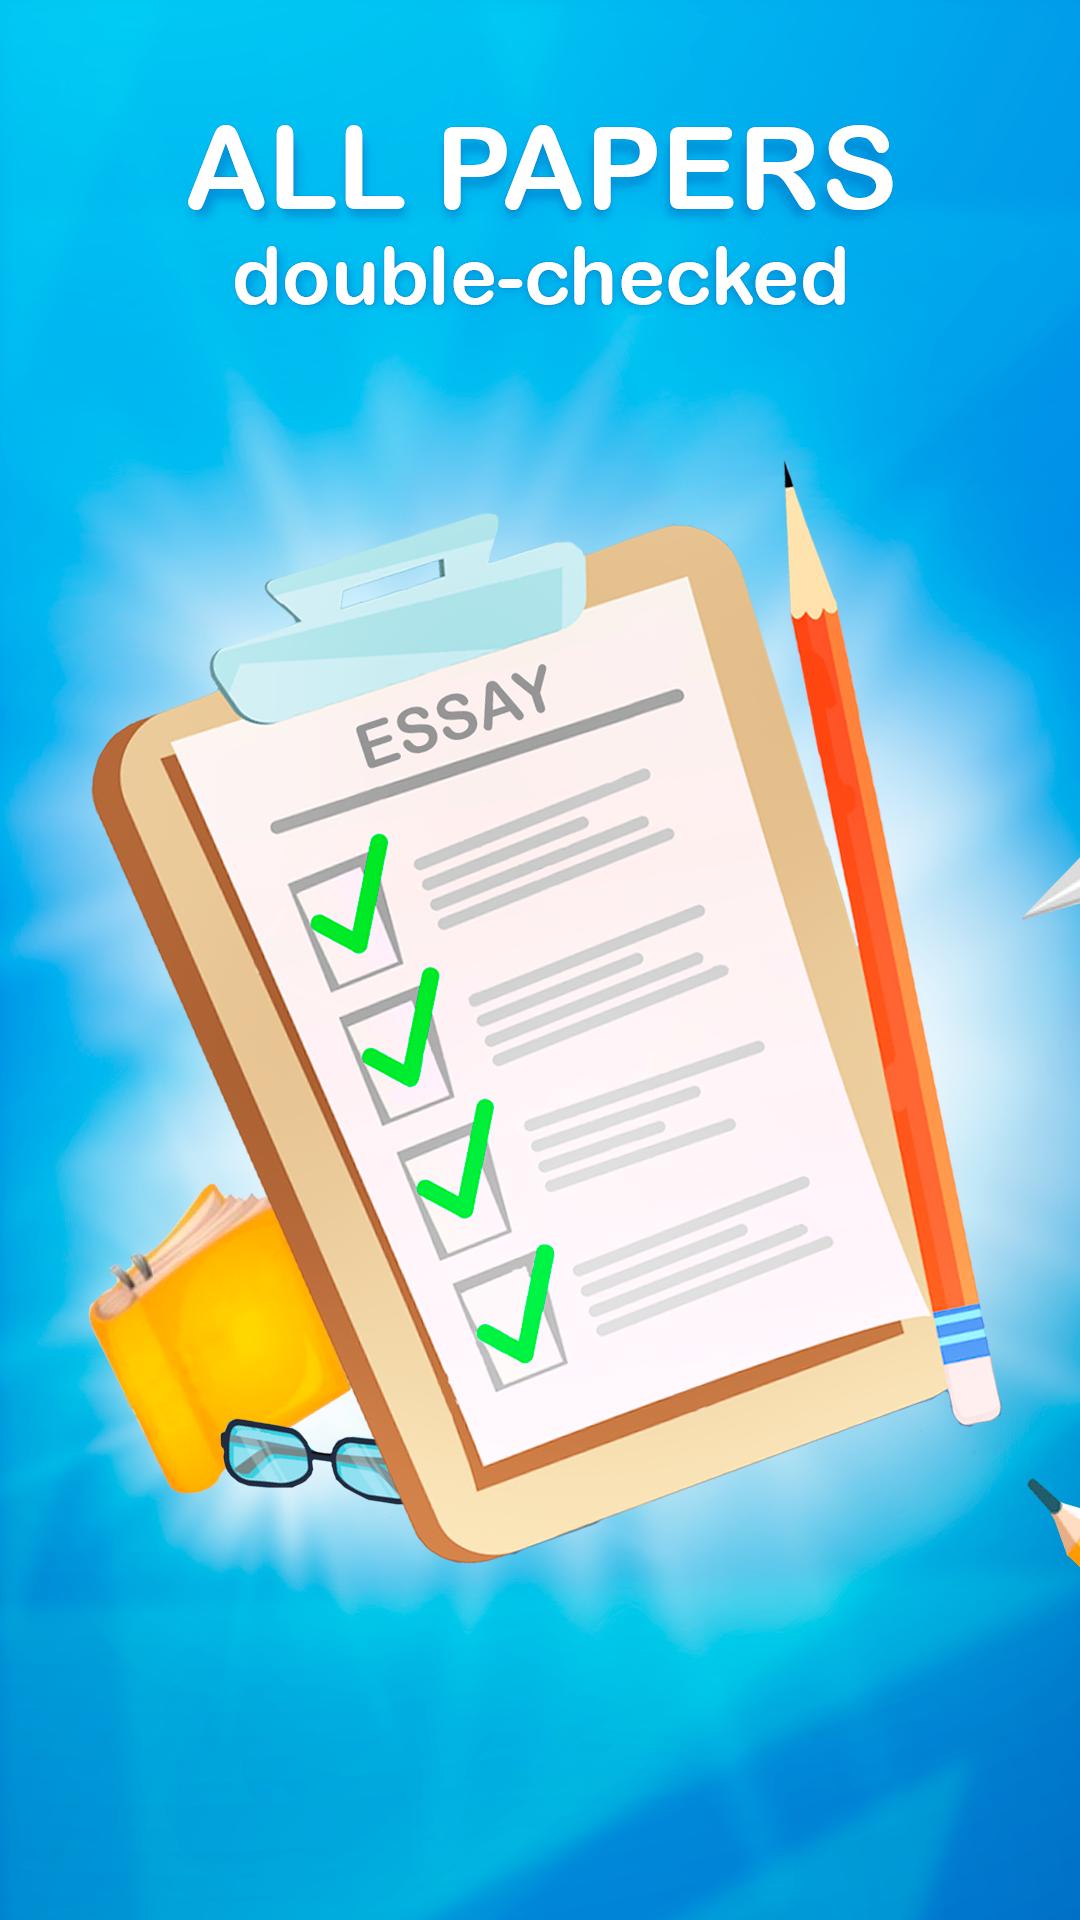 Fast custom essay writing service